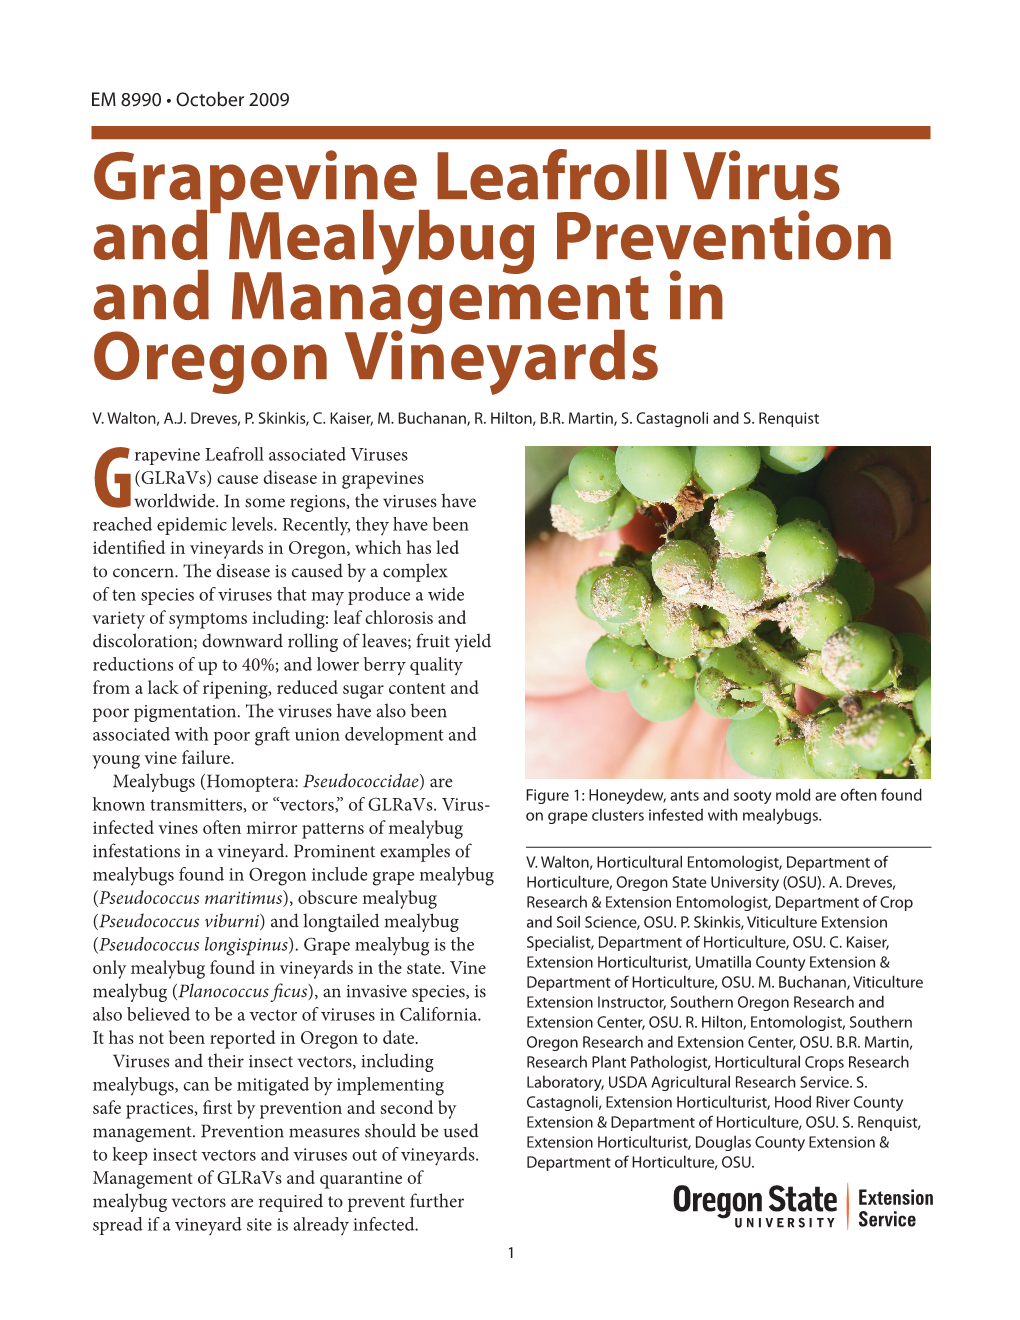 Grapevine Leafroll Virus and Mealybug Prevention and Management in Oregon Vineyards V